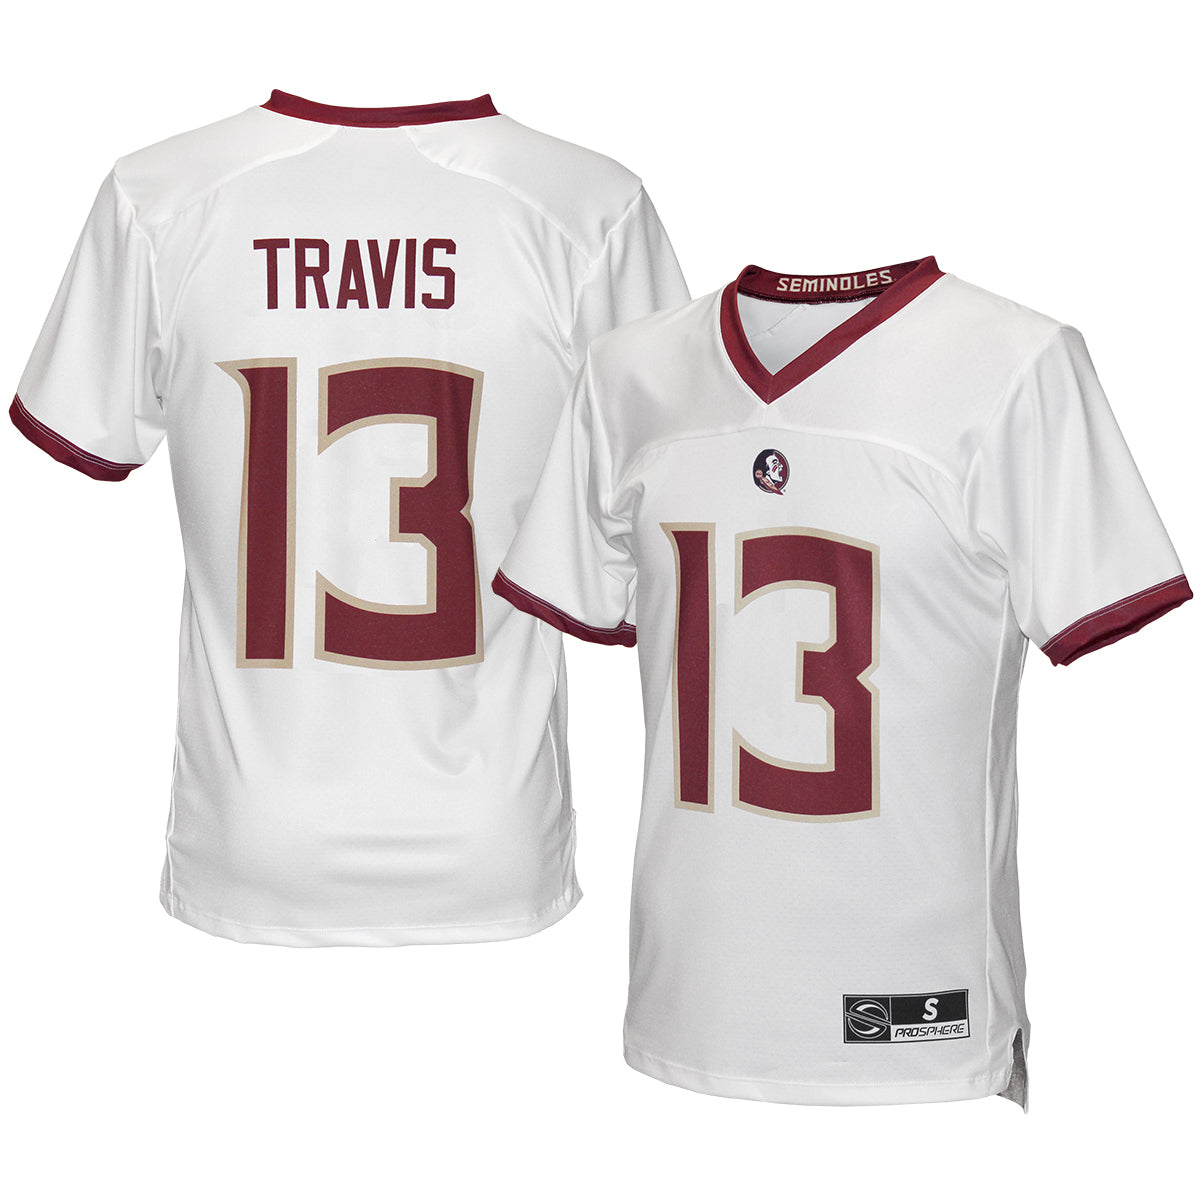 Florida State Seminoles Women's Apparel - Retro Brand The Jordan Travis Football Jersey (White) XL